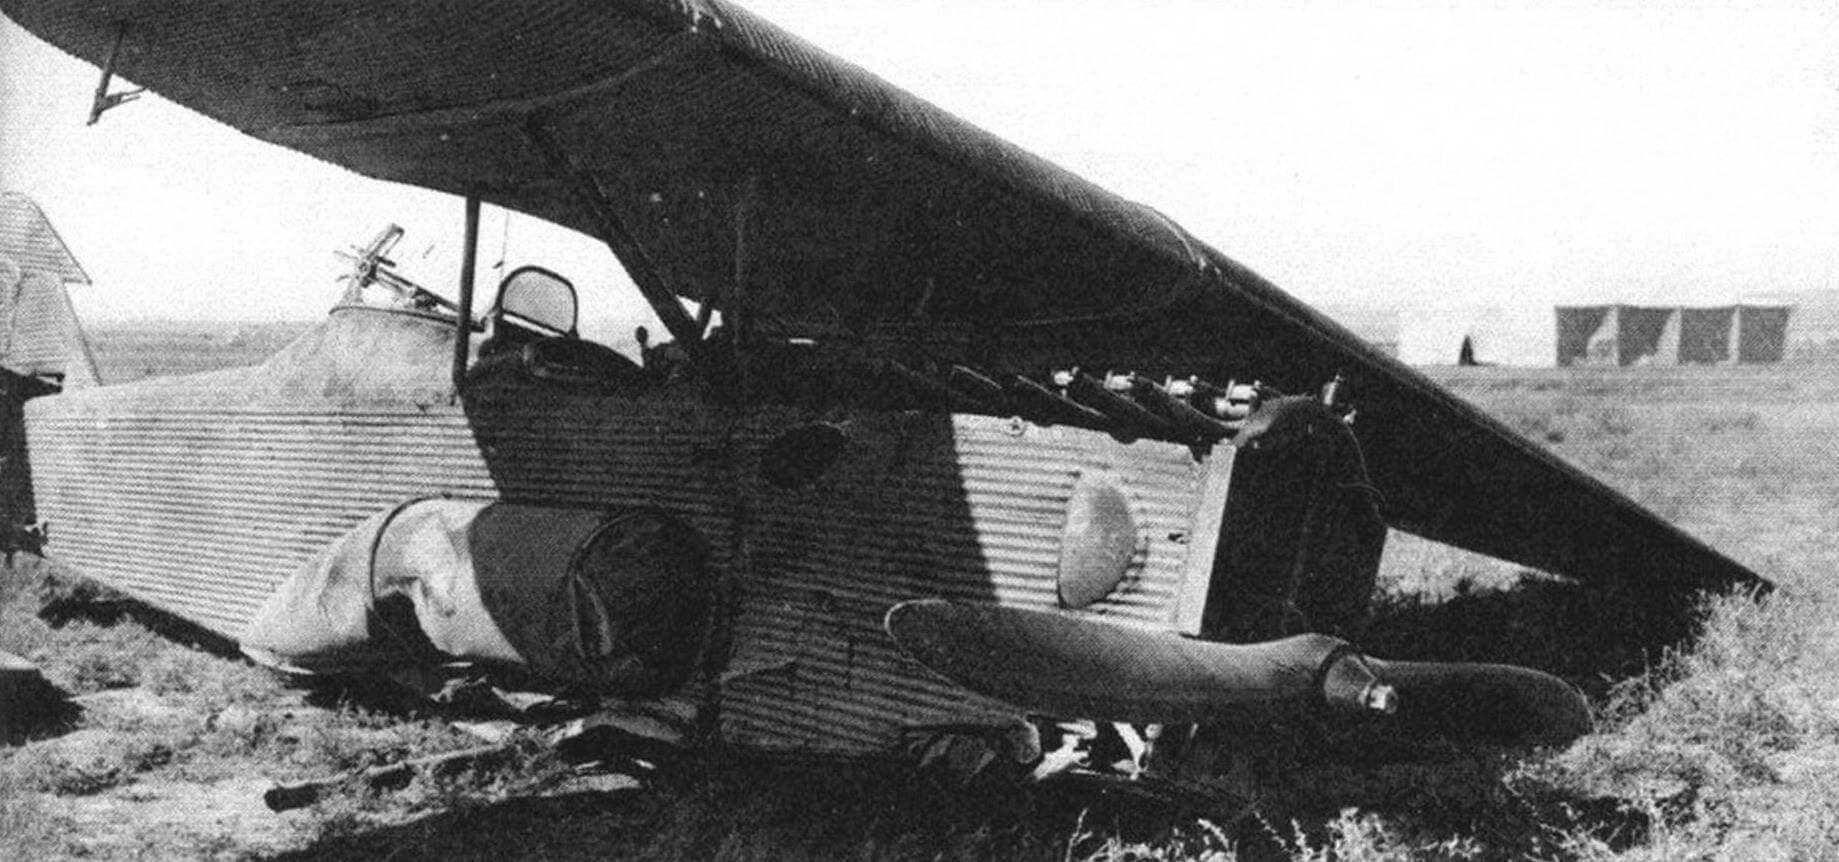 Авария Ю-21 на посадке из-за отказа мотора, 35-й авиаотряд, Троицк, летчик М.Н. Юсуф